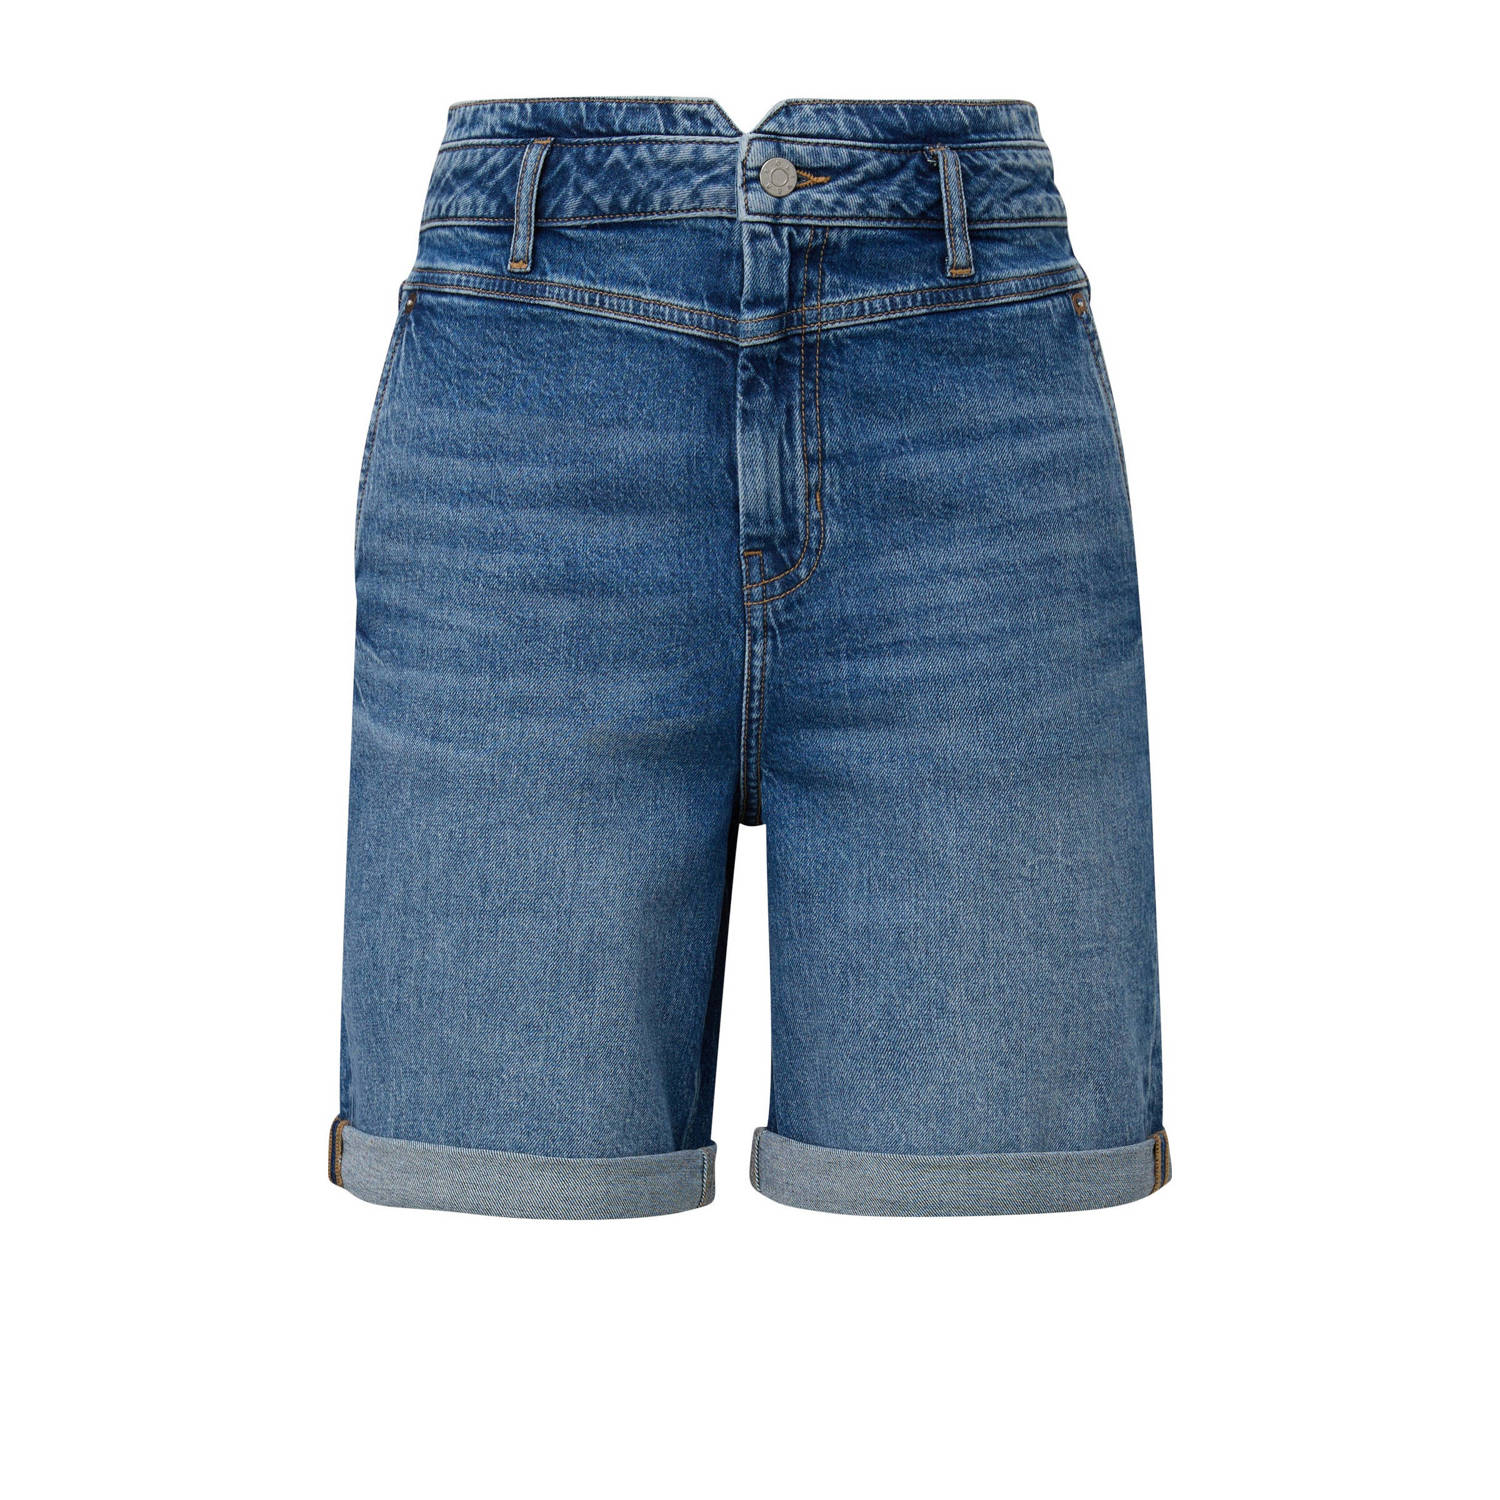 S.Oliver high waist capri jeans dark blue denim